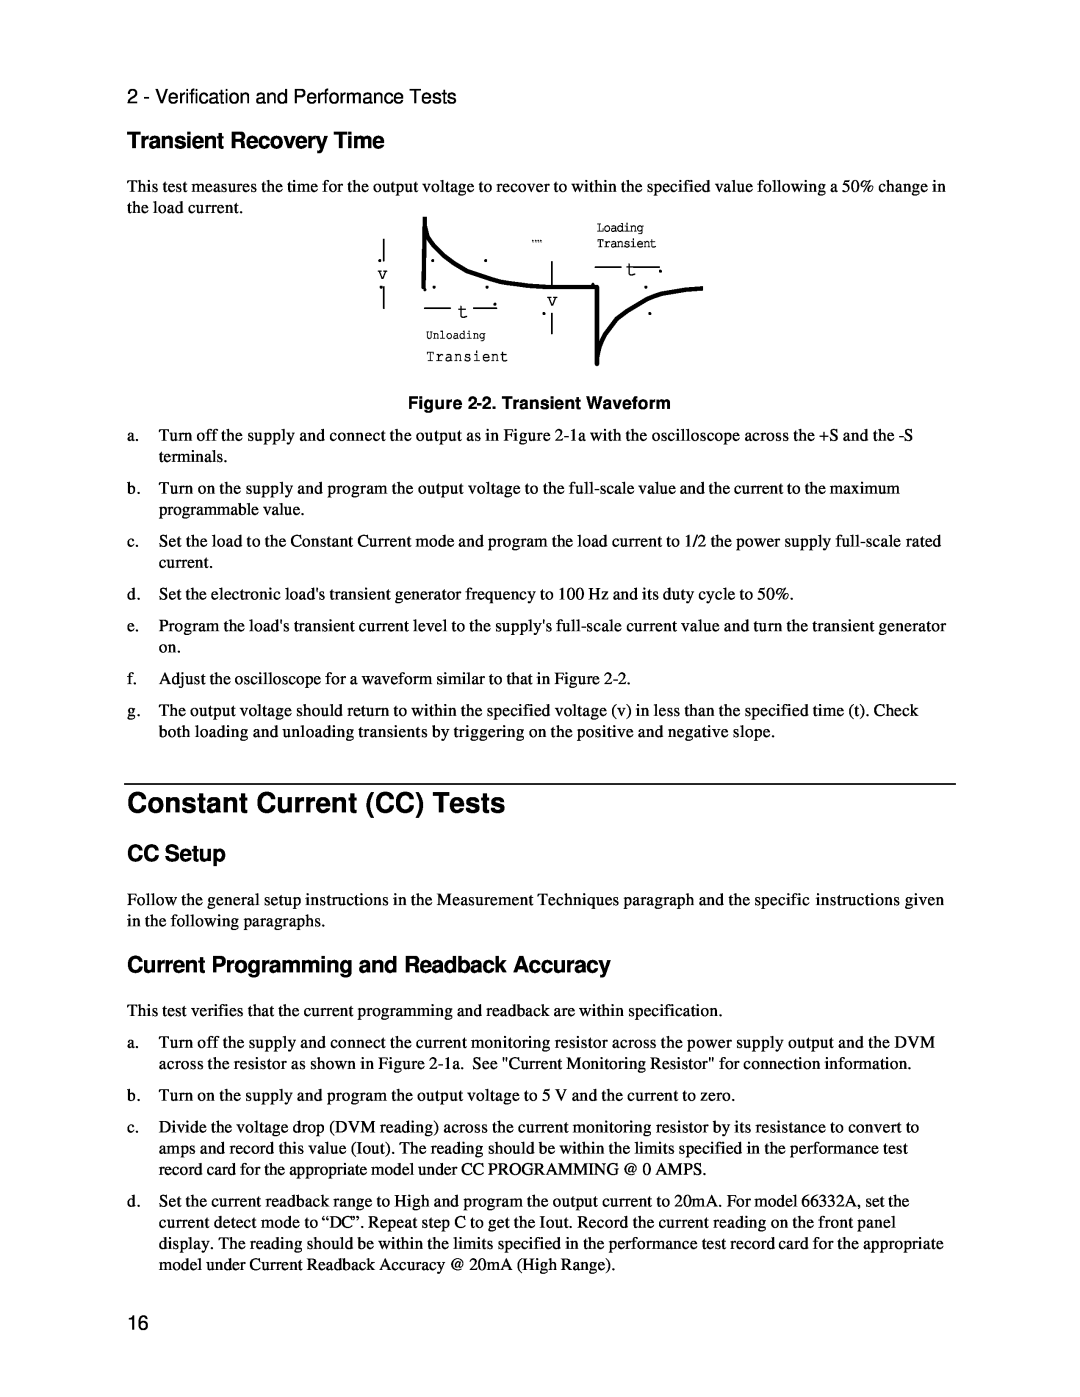 Agilent Technologies 6634B, 66332A Constant Current CC Tests, Transient Recovery Time, CC Setup, 2.Transient Waveform 